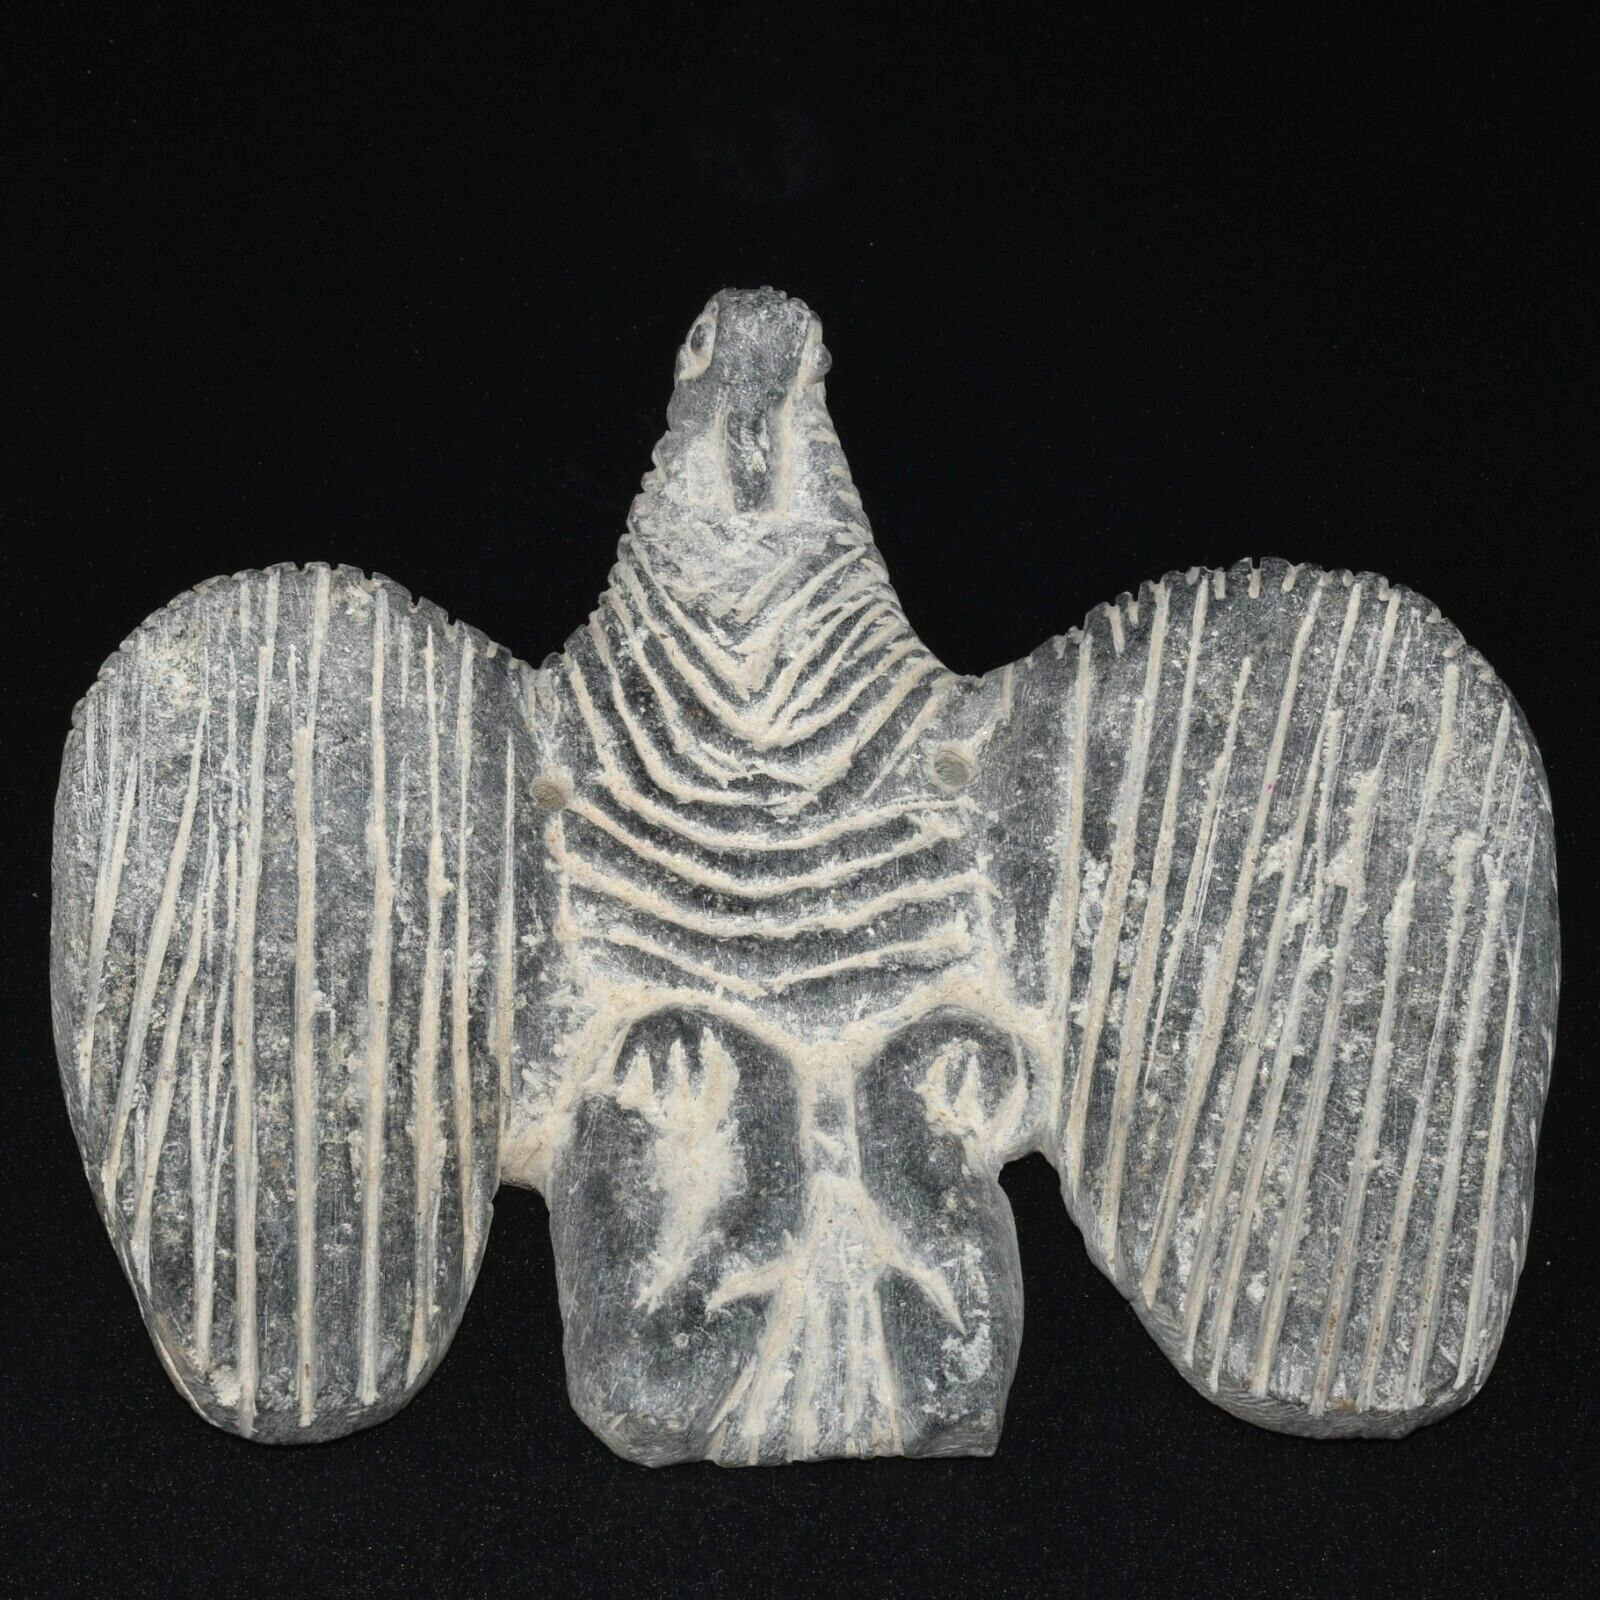 Large Ancient Greco Bactrian Stone Composite Bird Statue Circa 2500 BC-1500 BC